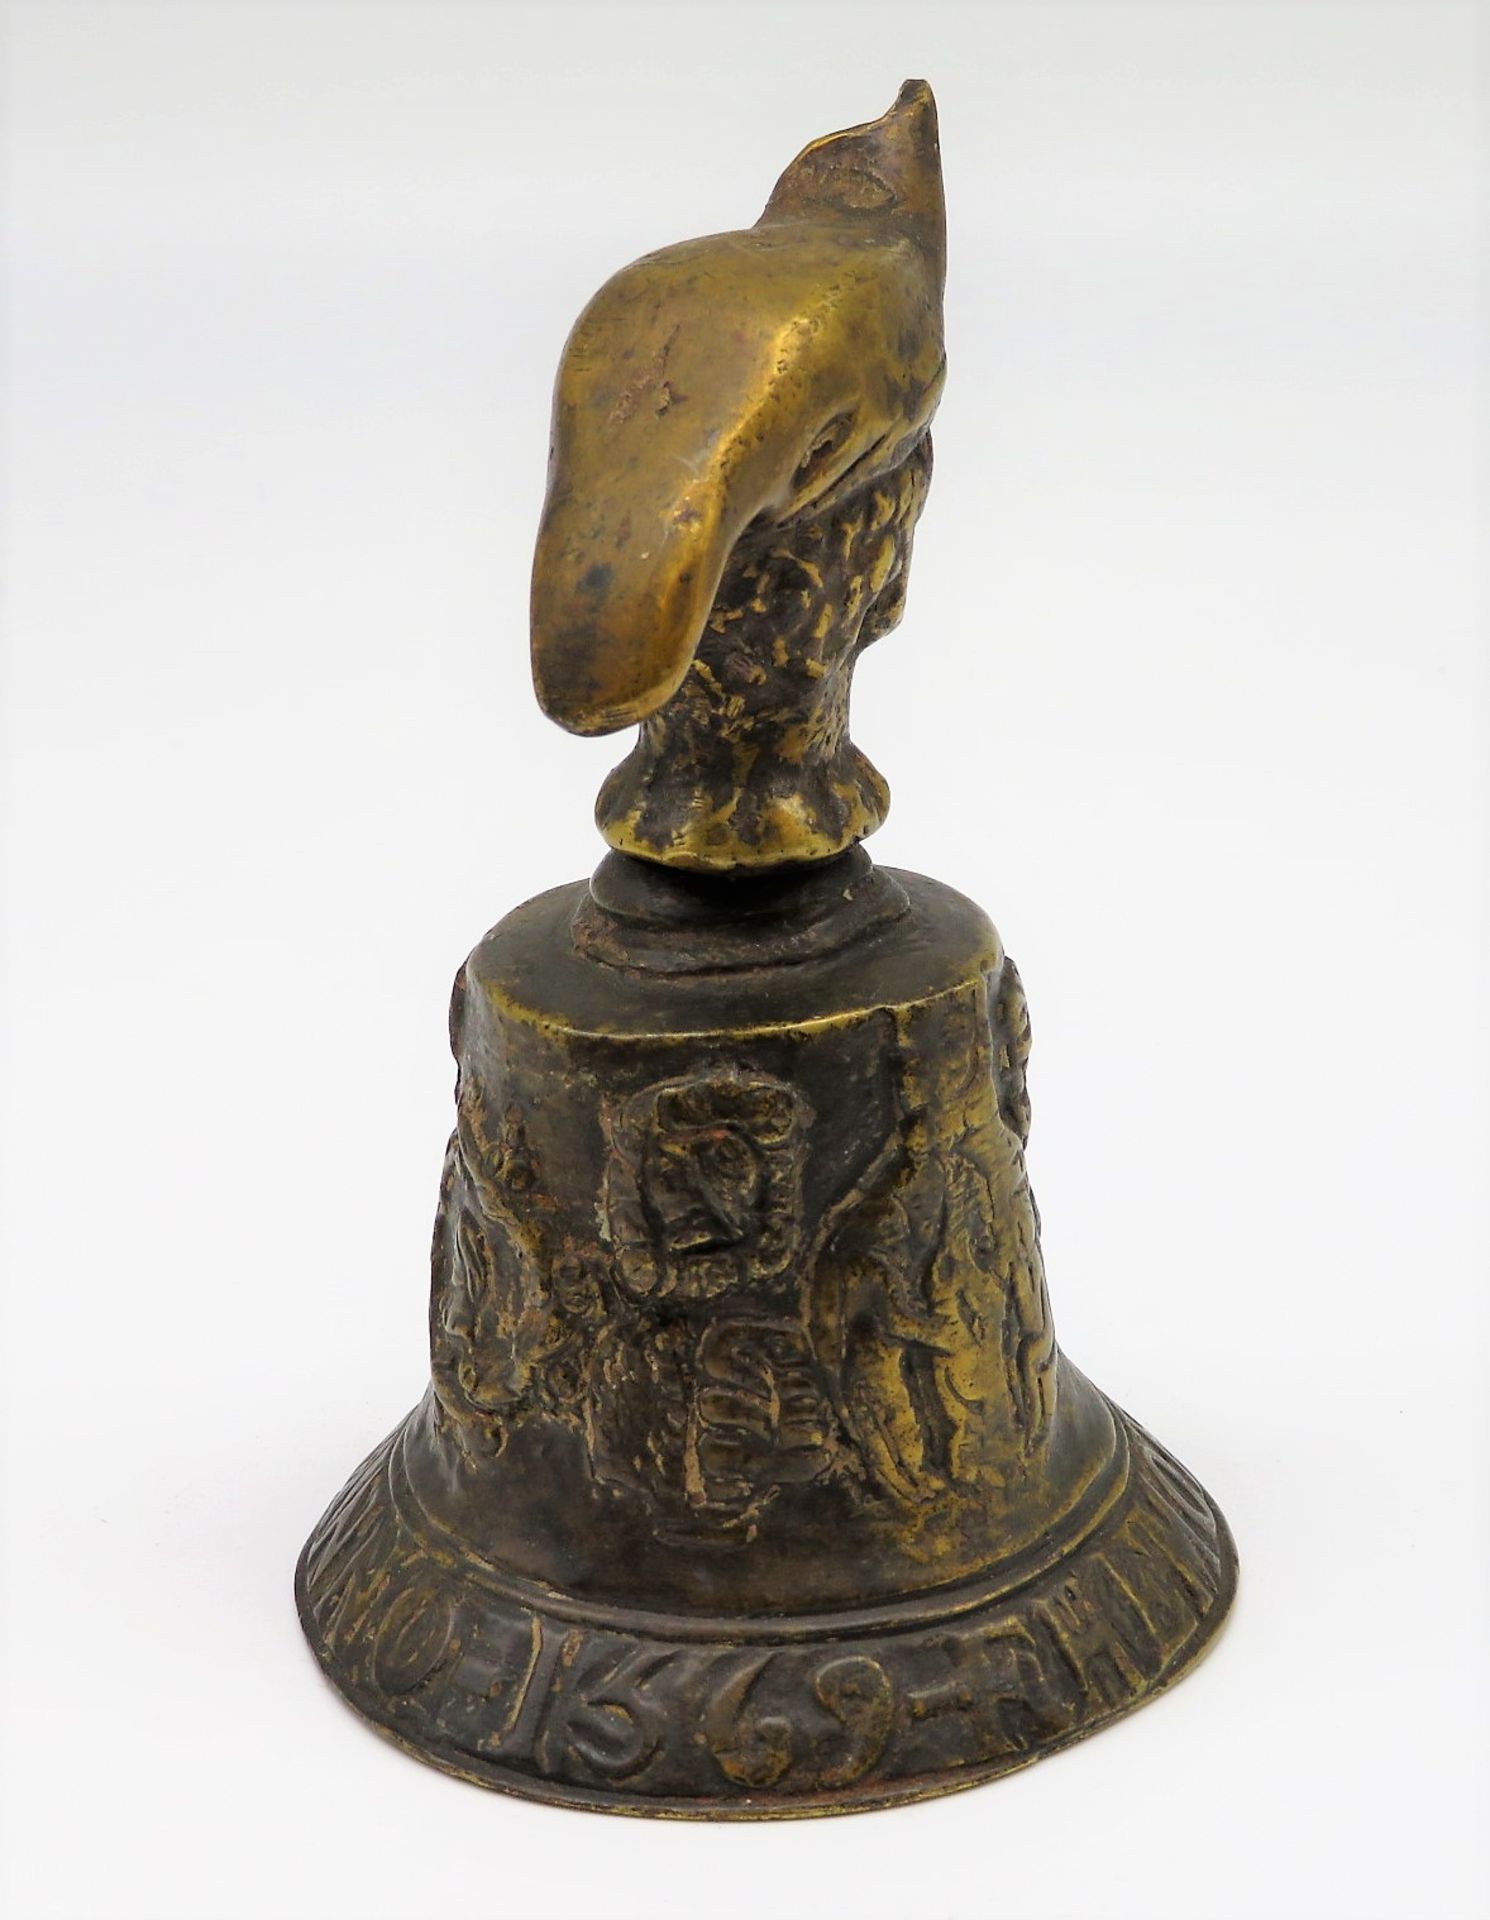 Tischglocke, Bronze, dat. 1569, wohl späterer Abguss, h 13 cm, d 8,5 cm. - Image 2 of 2